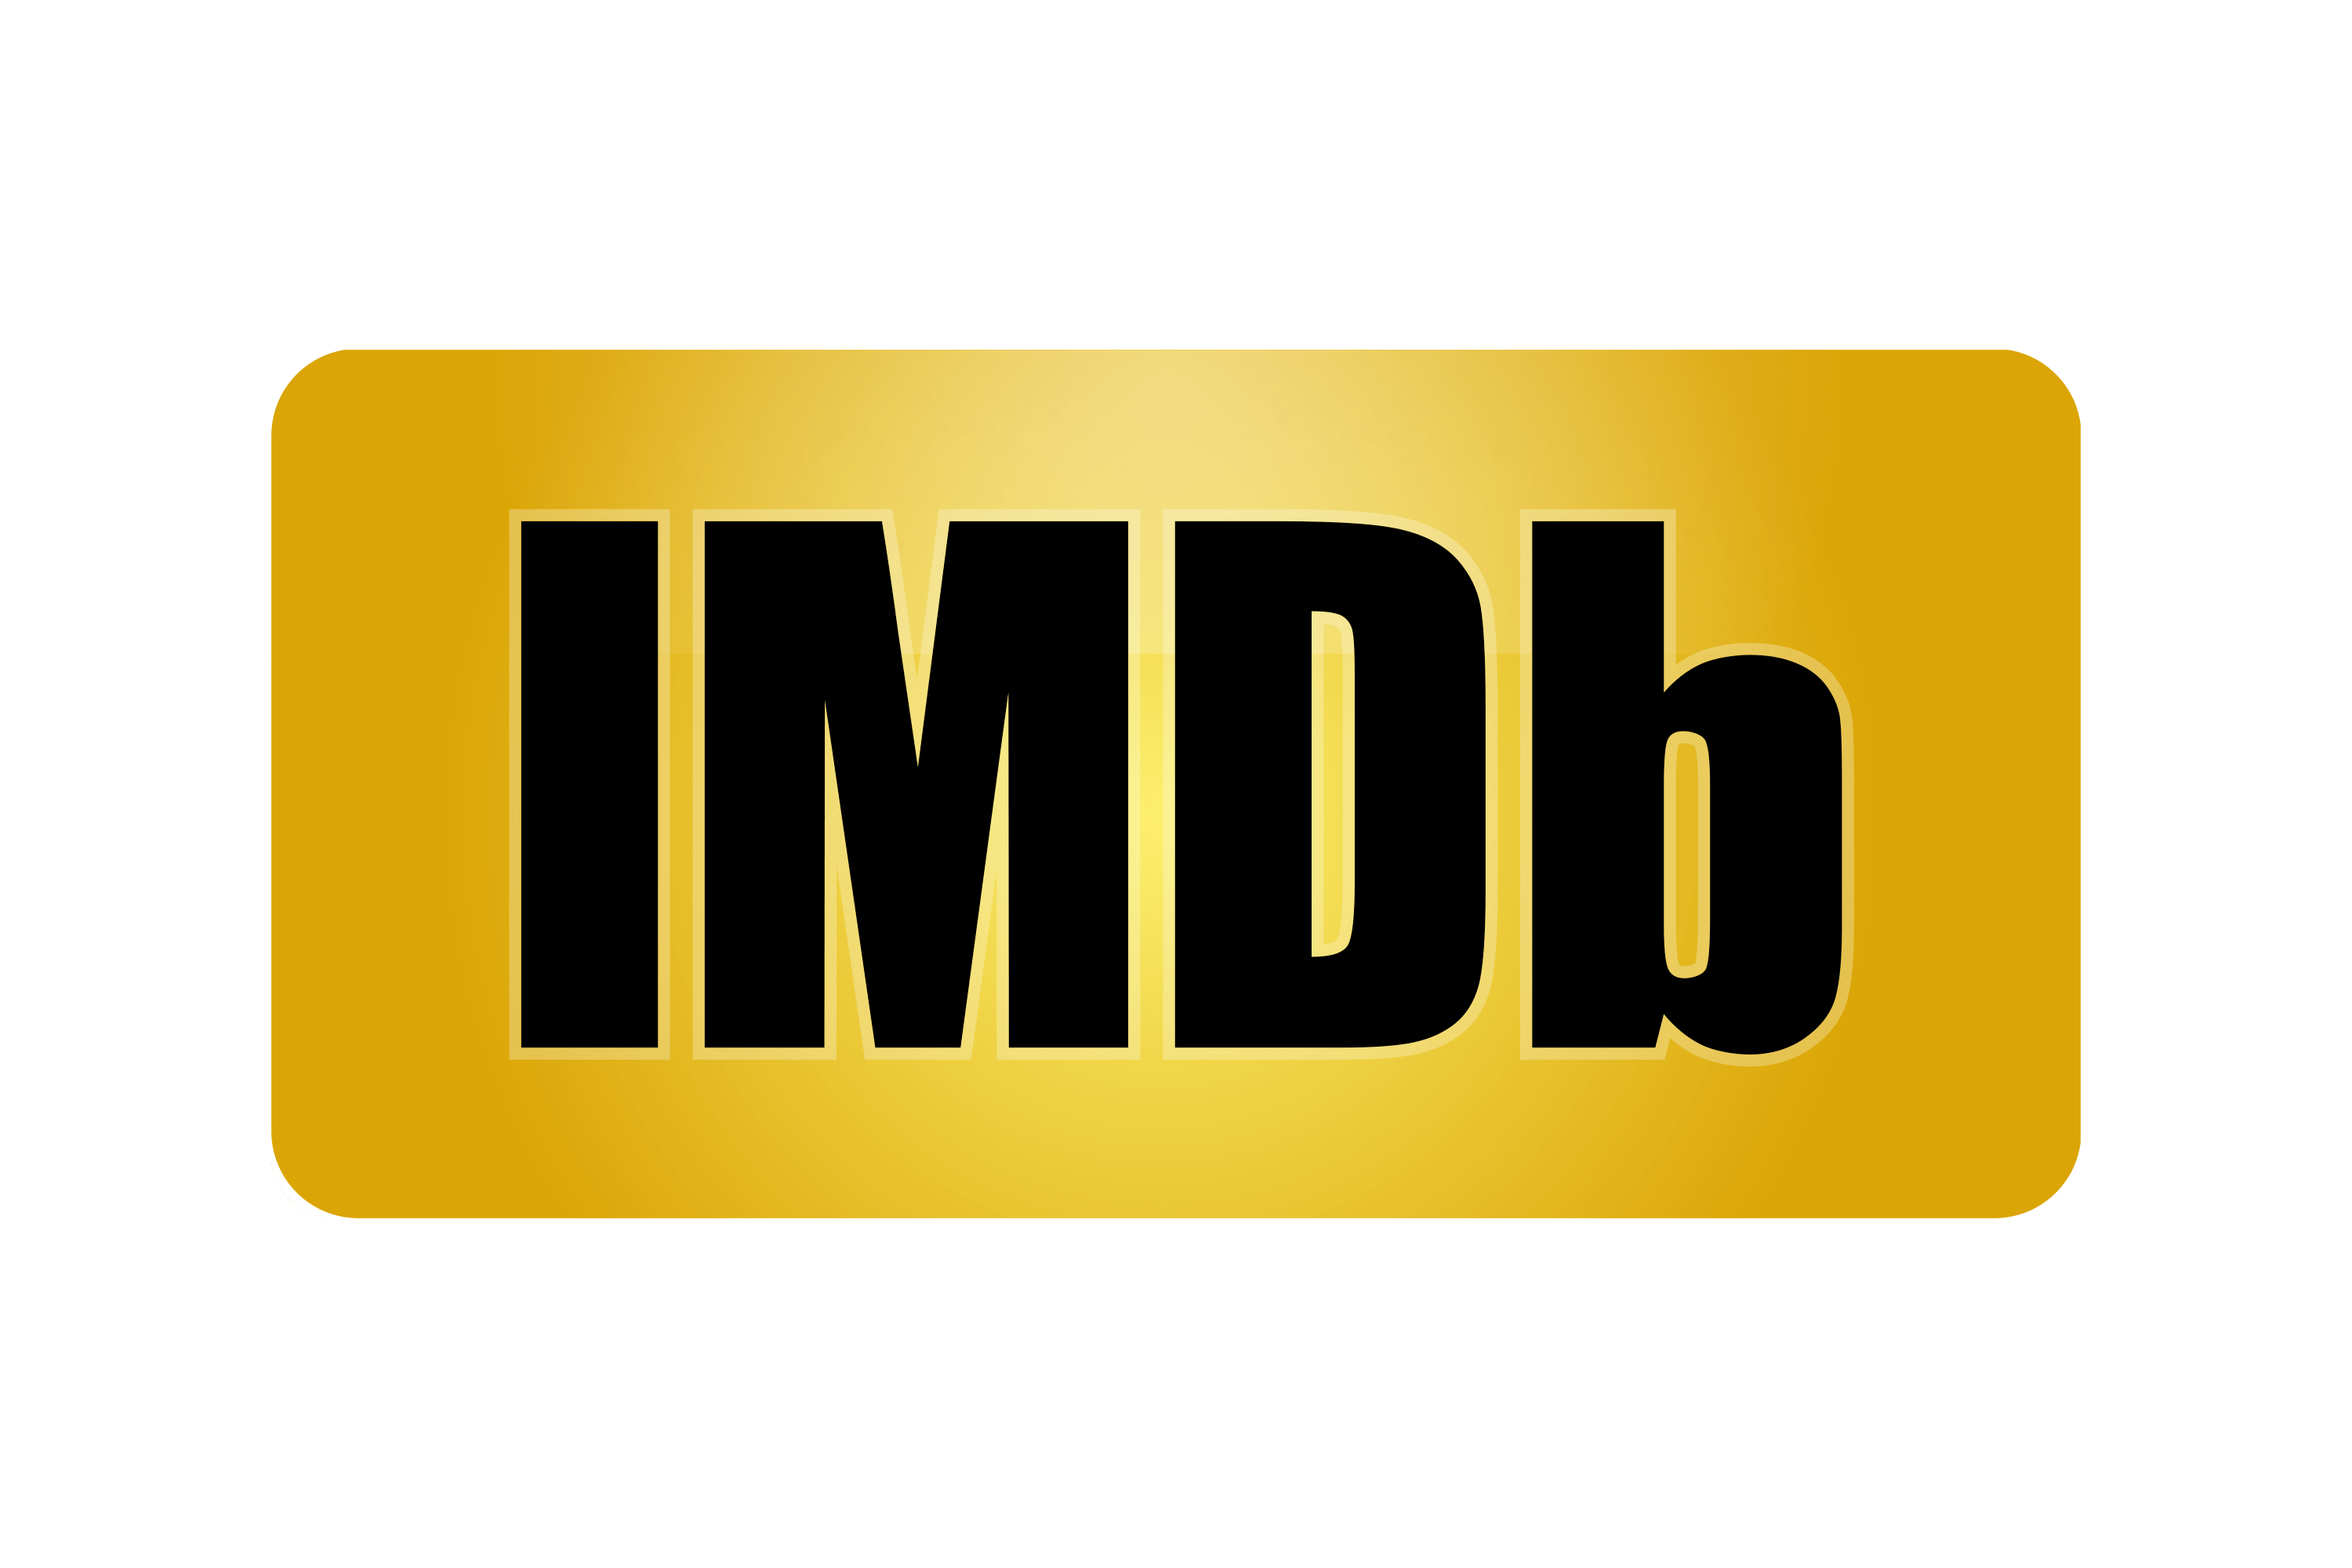 Internet Movie Database (IMDb)